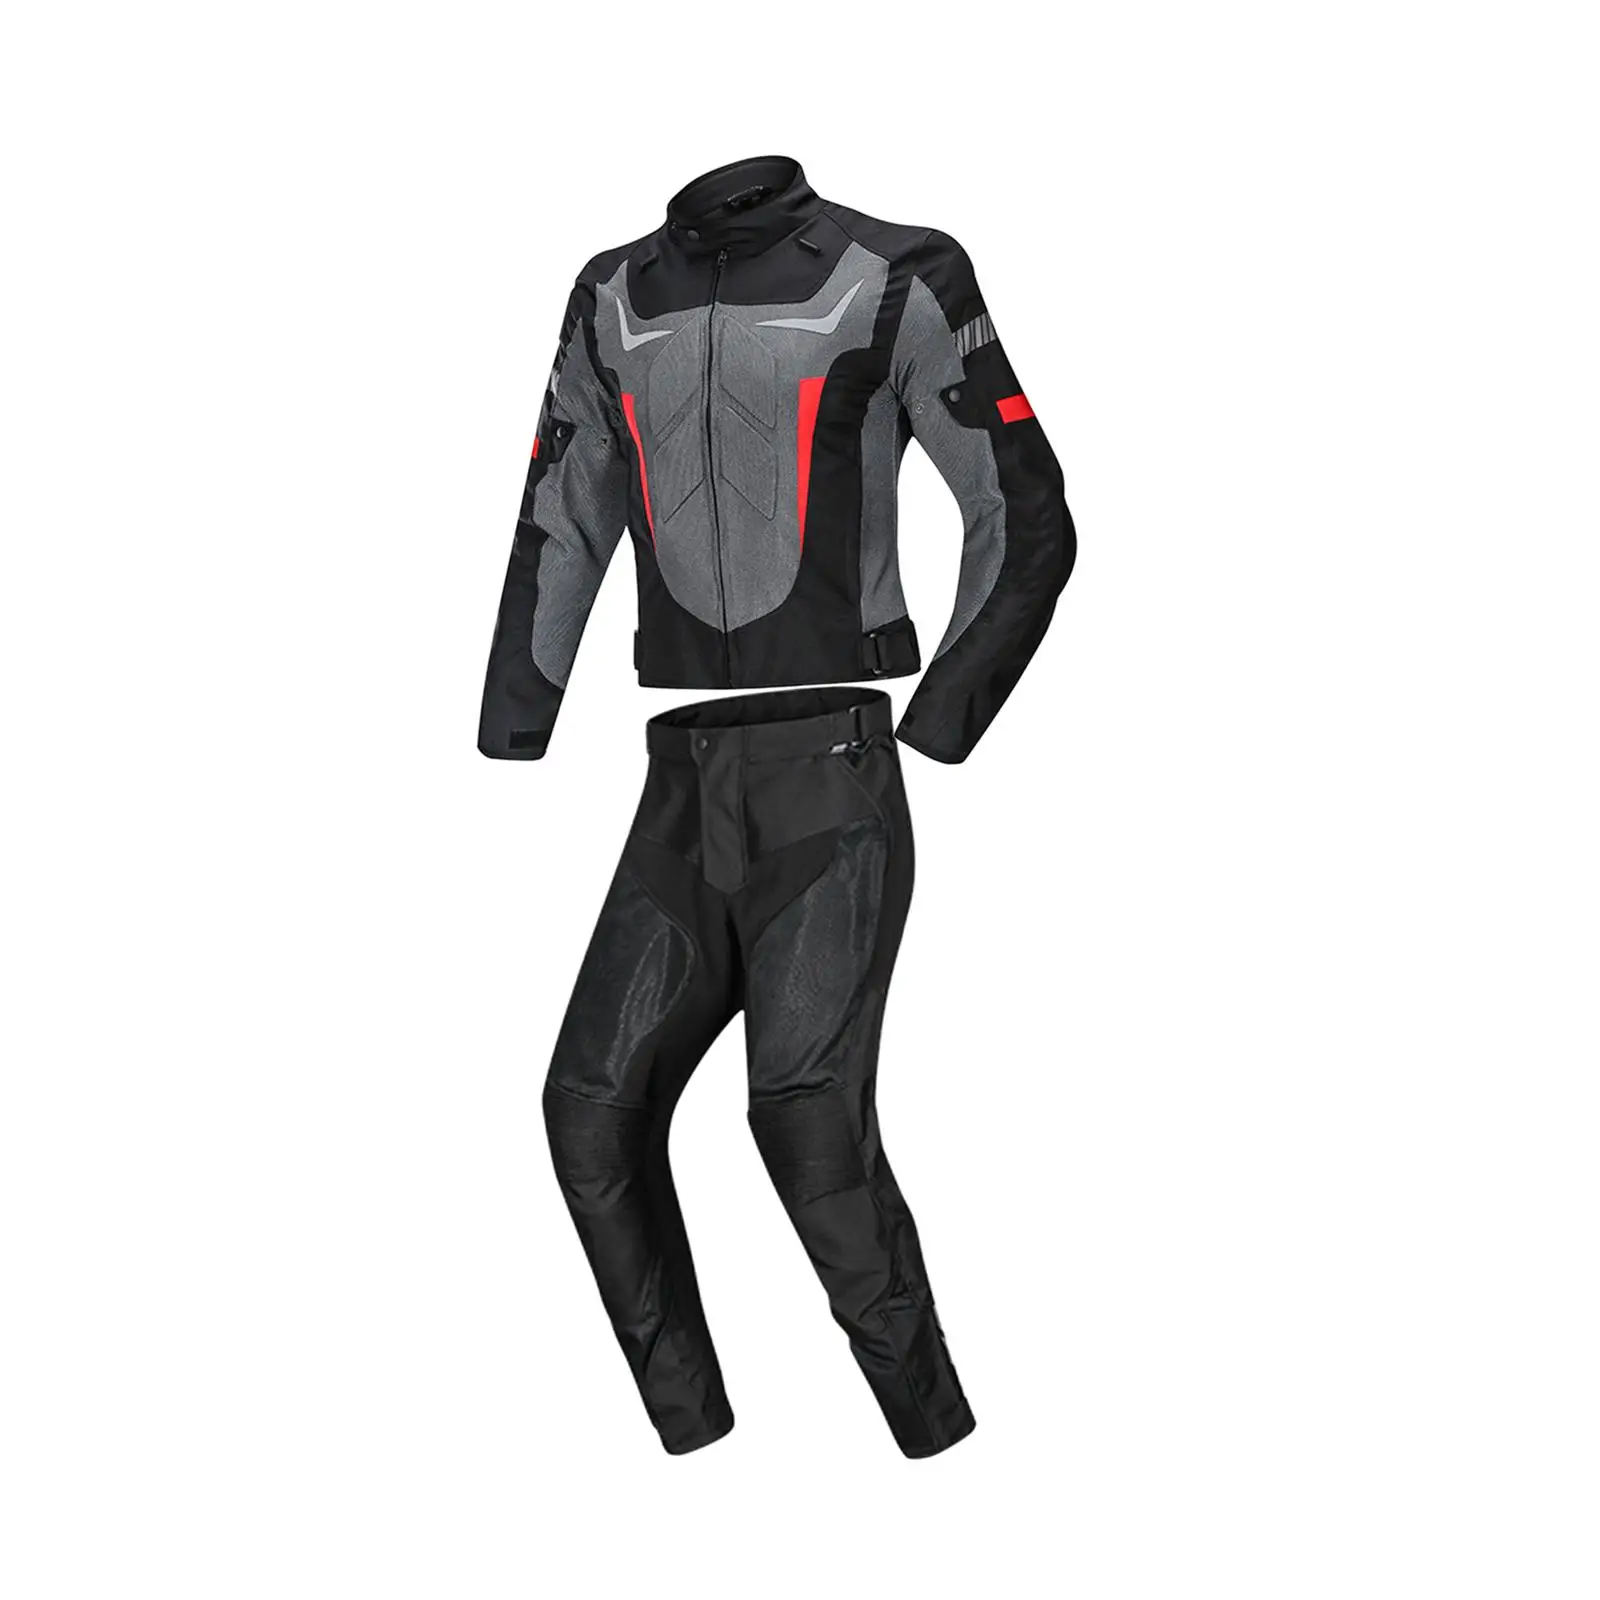 Waterproof Motorcycle Jacket Pants Racing Suit with Armor Pad Protective Summer Men Women 600D Oxford Windproof Racing Clothes